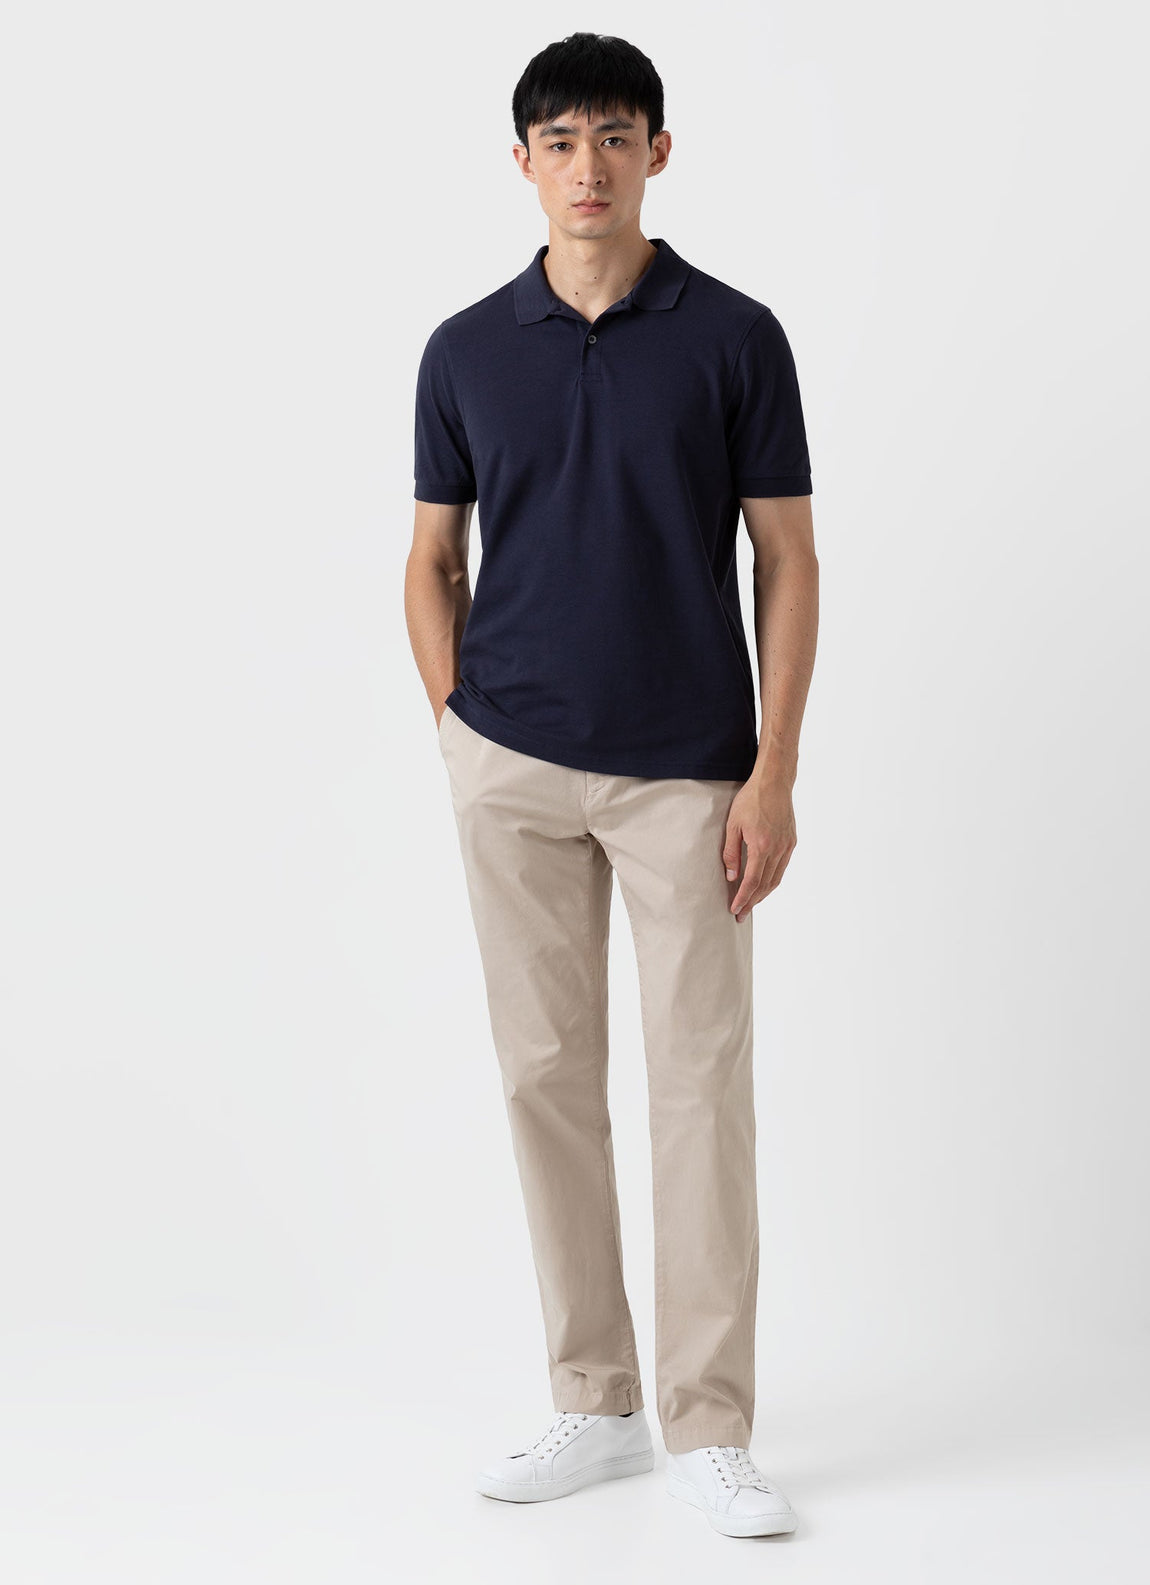 Essentials Men's Regular-Fit Cotton Pique Polo Shirt, Navy, Large :  : Clothing, Shoes & Accessories